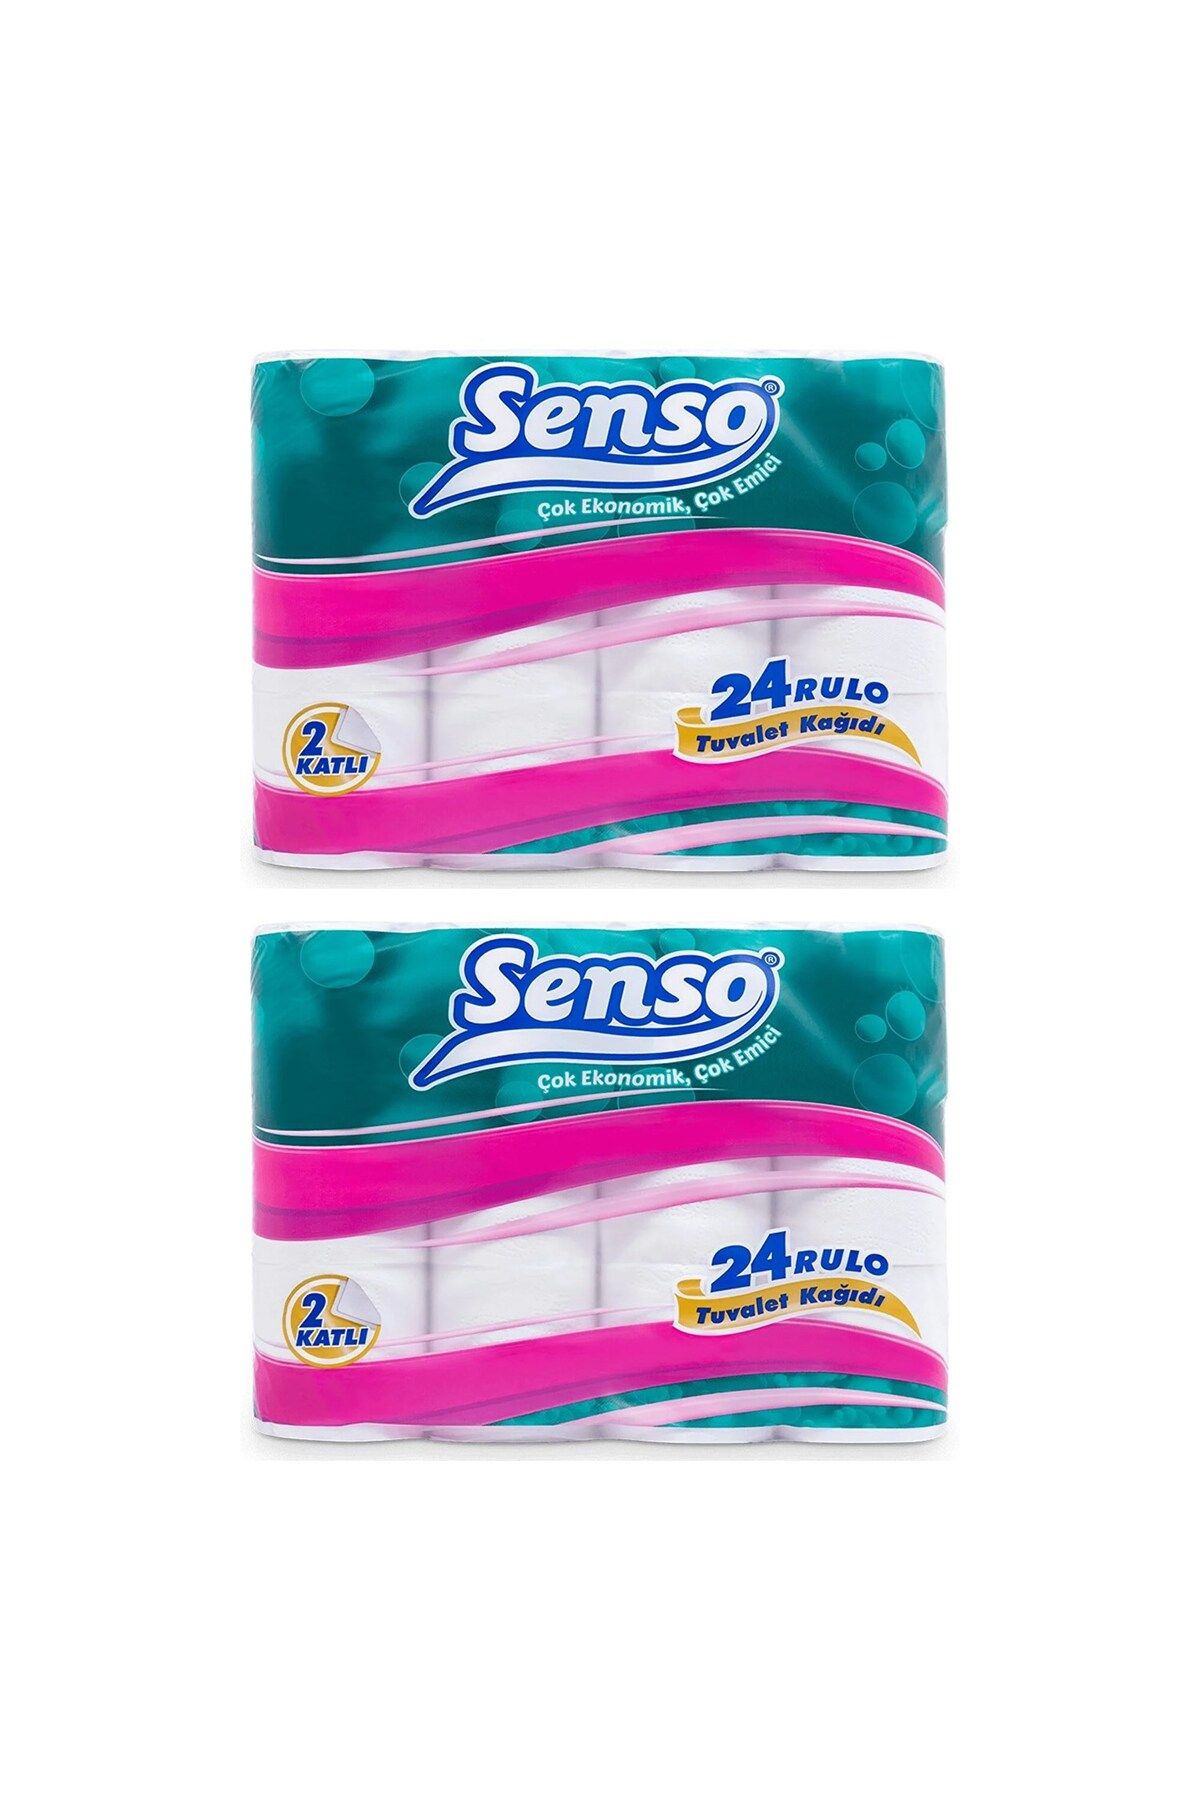 Senso Tuvalet Kağıdı 24 lü 2 li (48 Rulo)